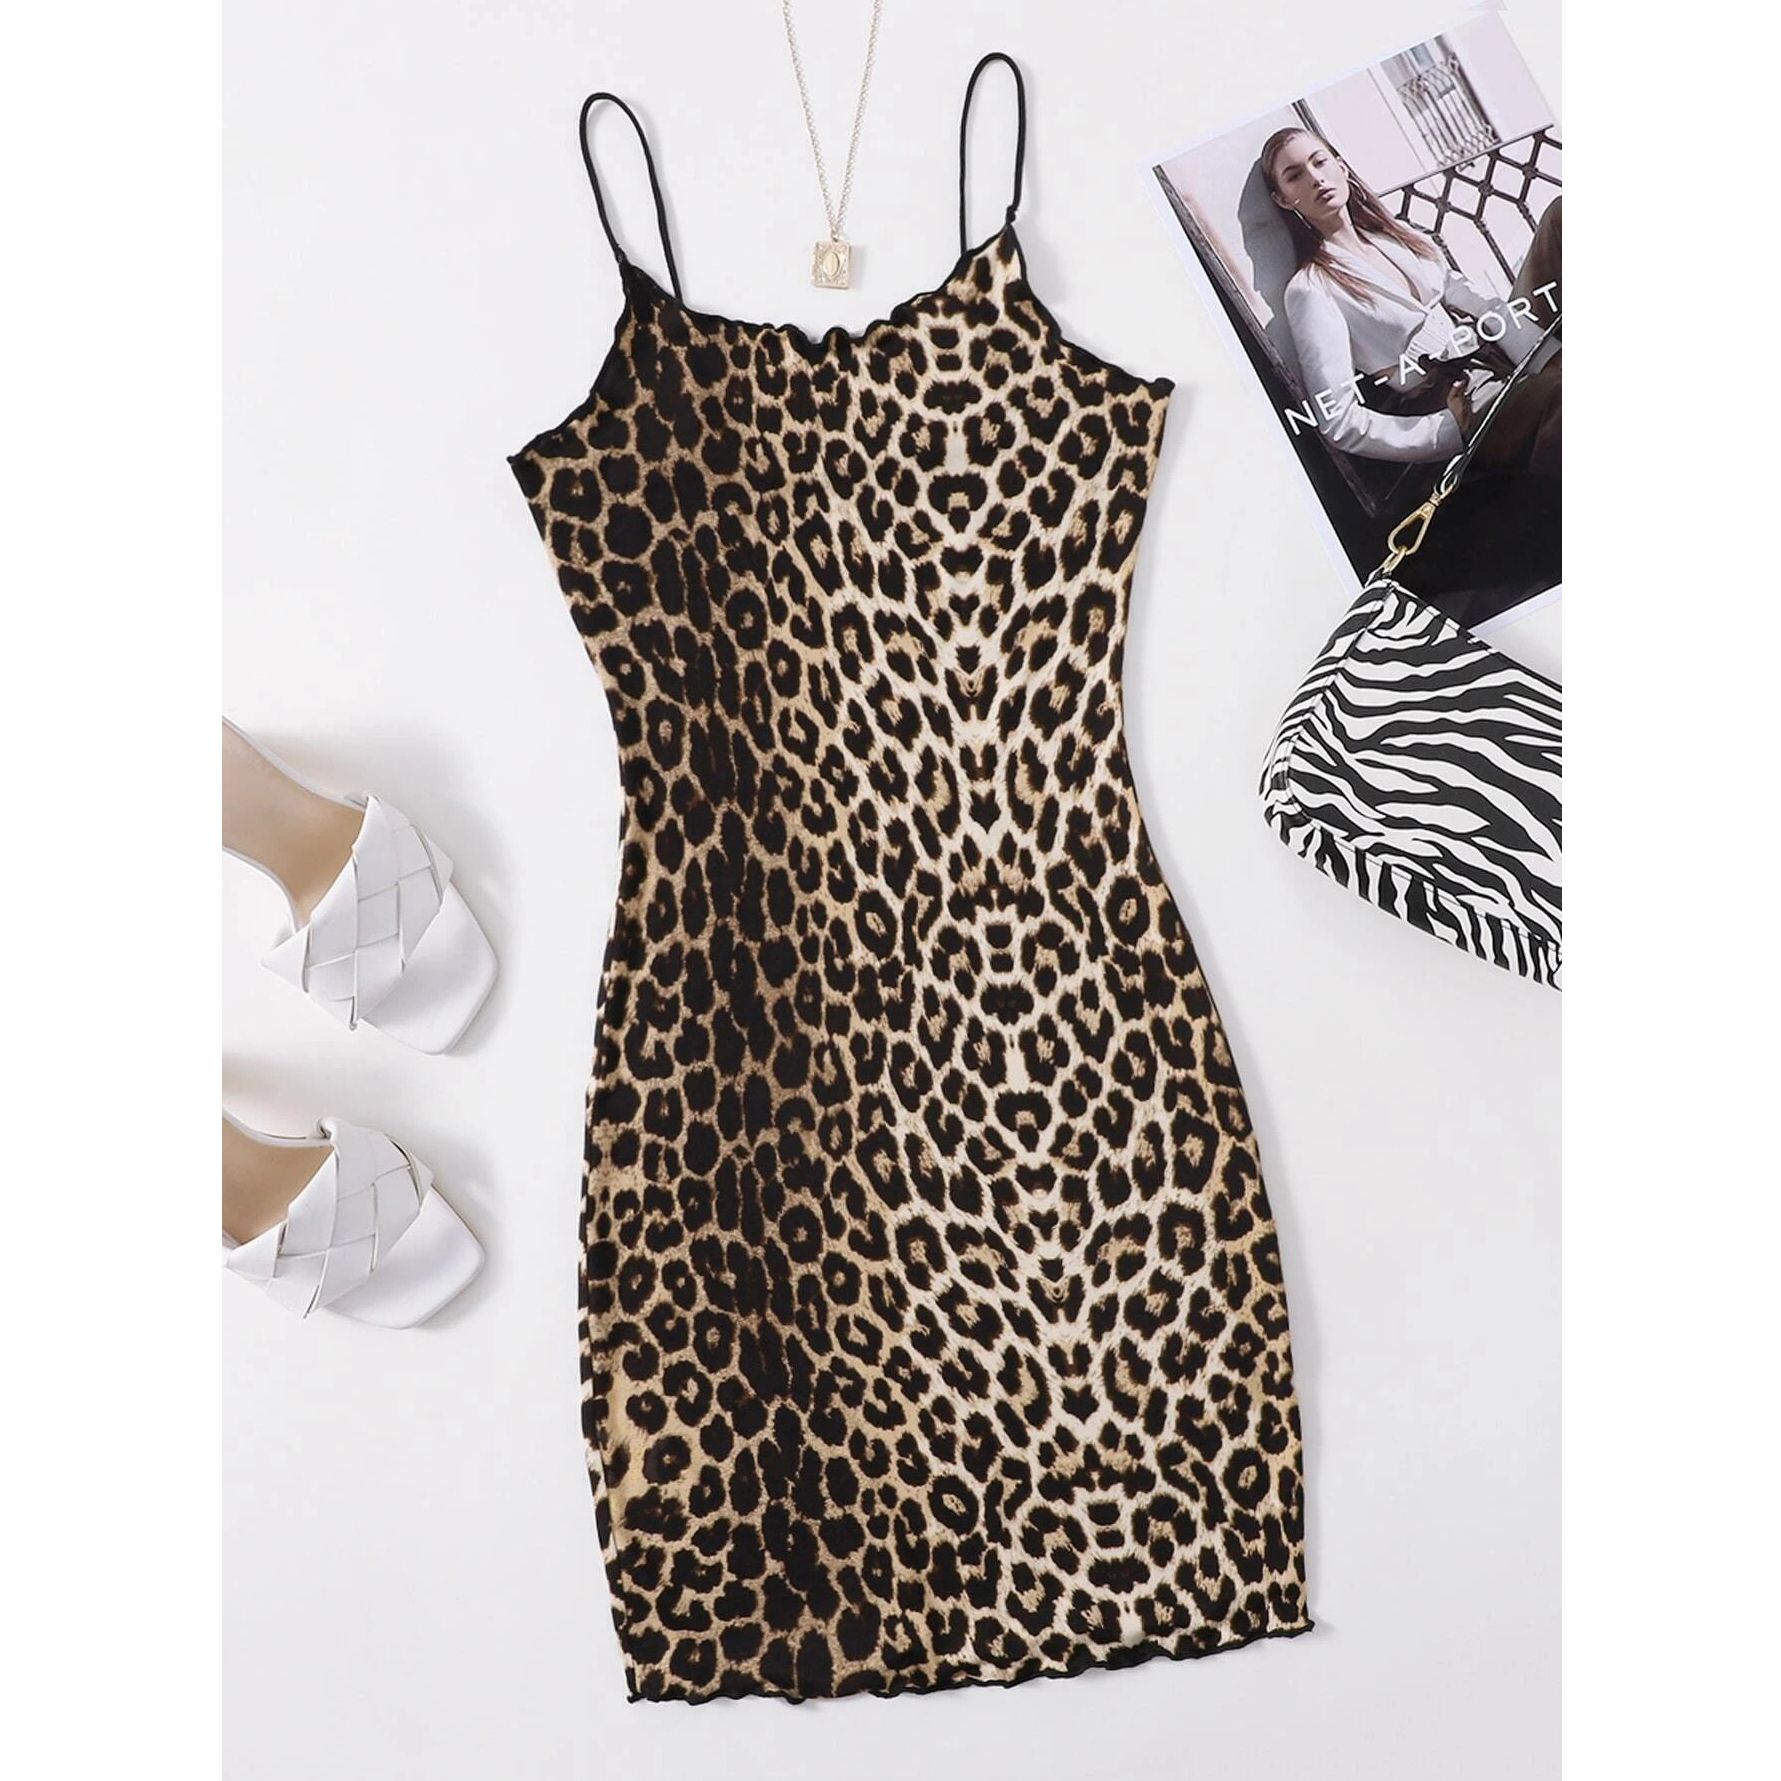 Lettuce Trim Leopard Dress - L